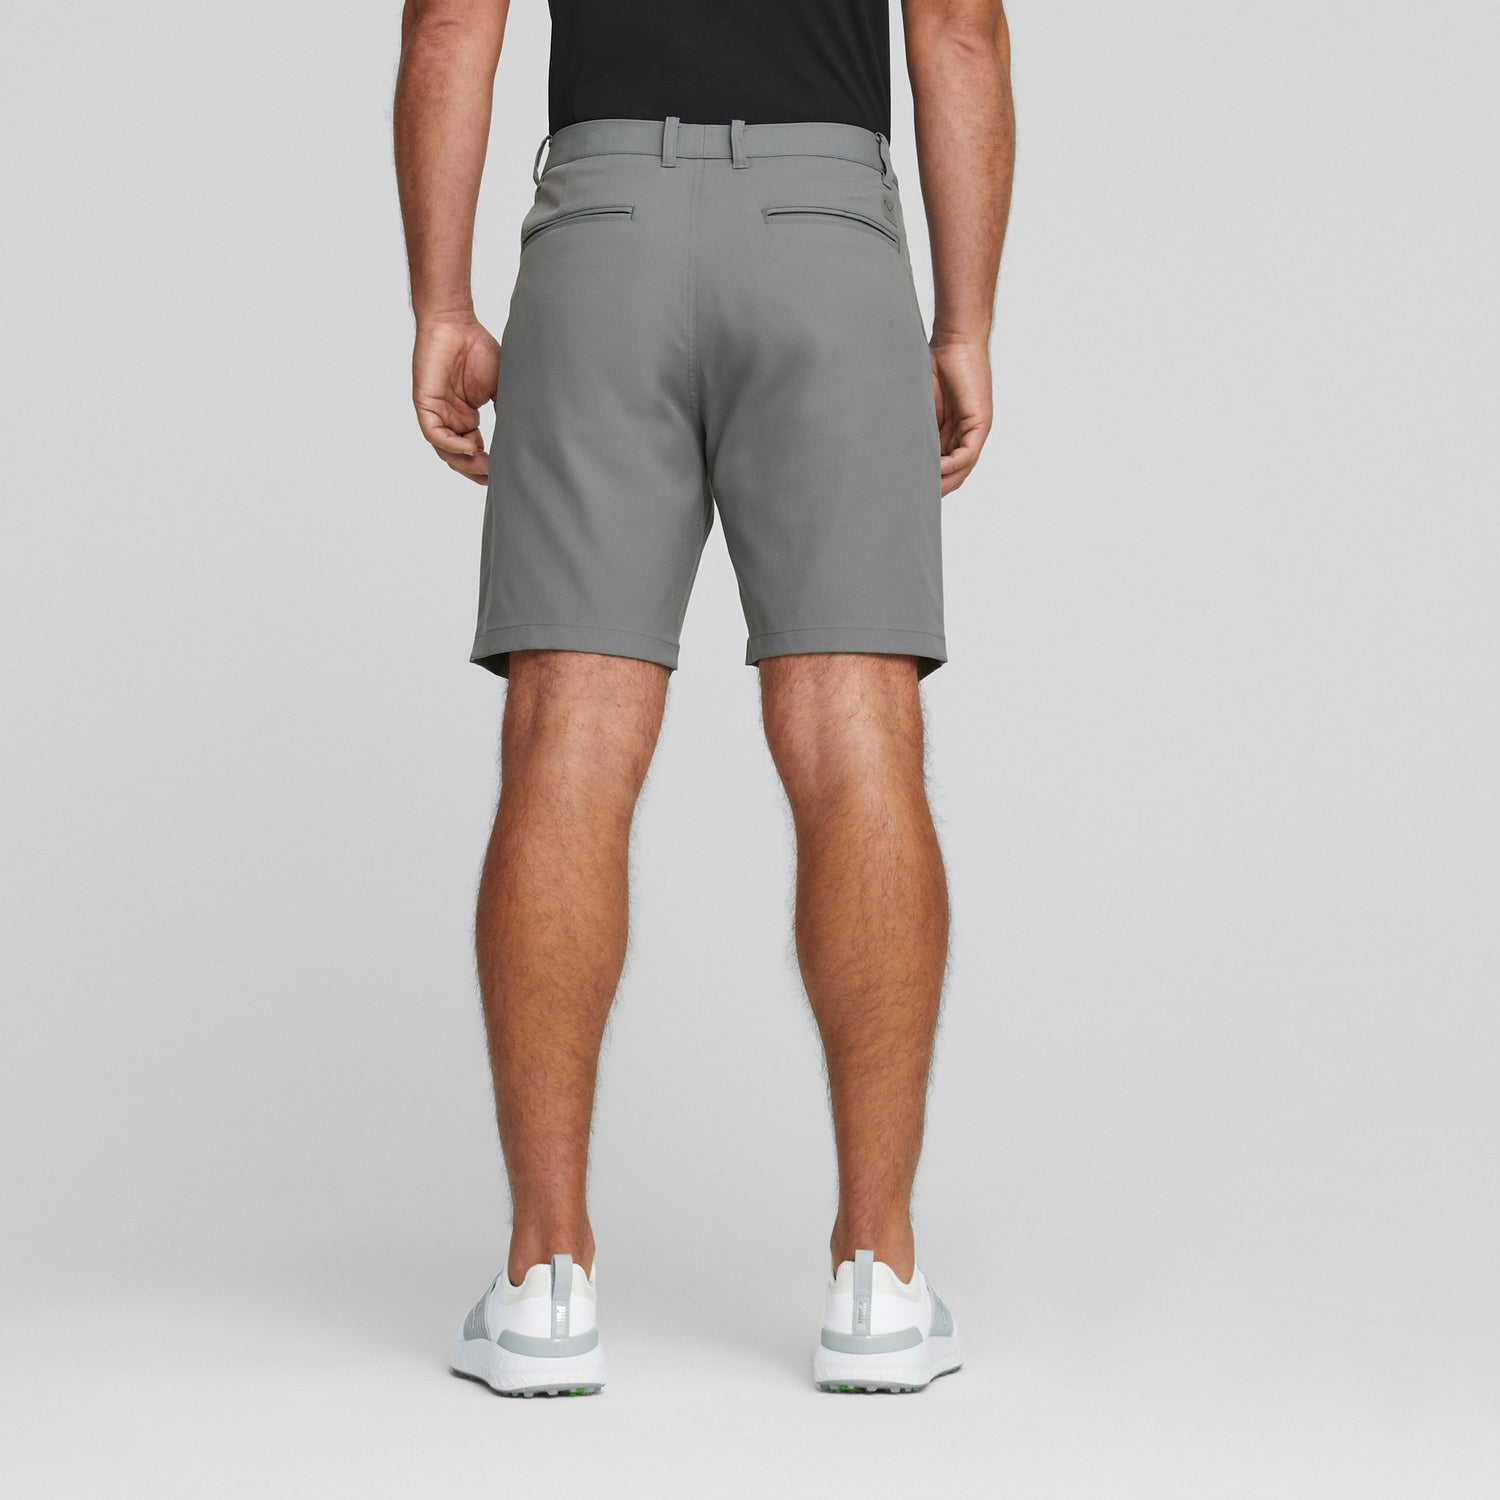 Men's Golf Shorts, Performance Golf Shorts